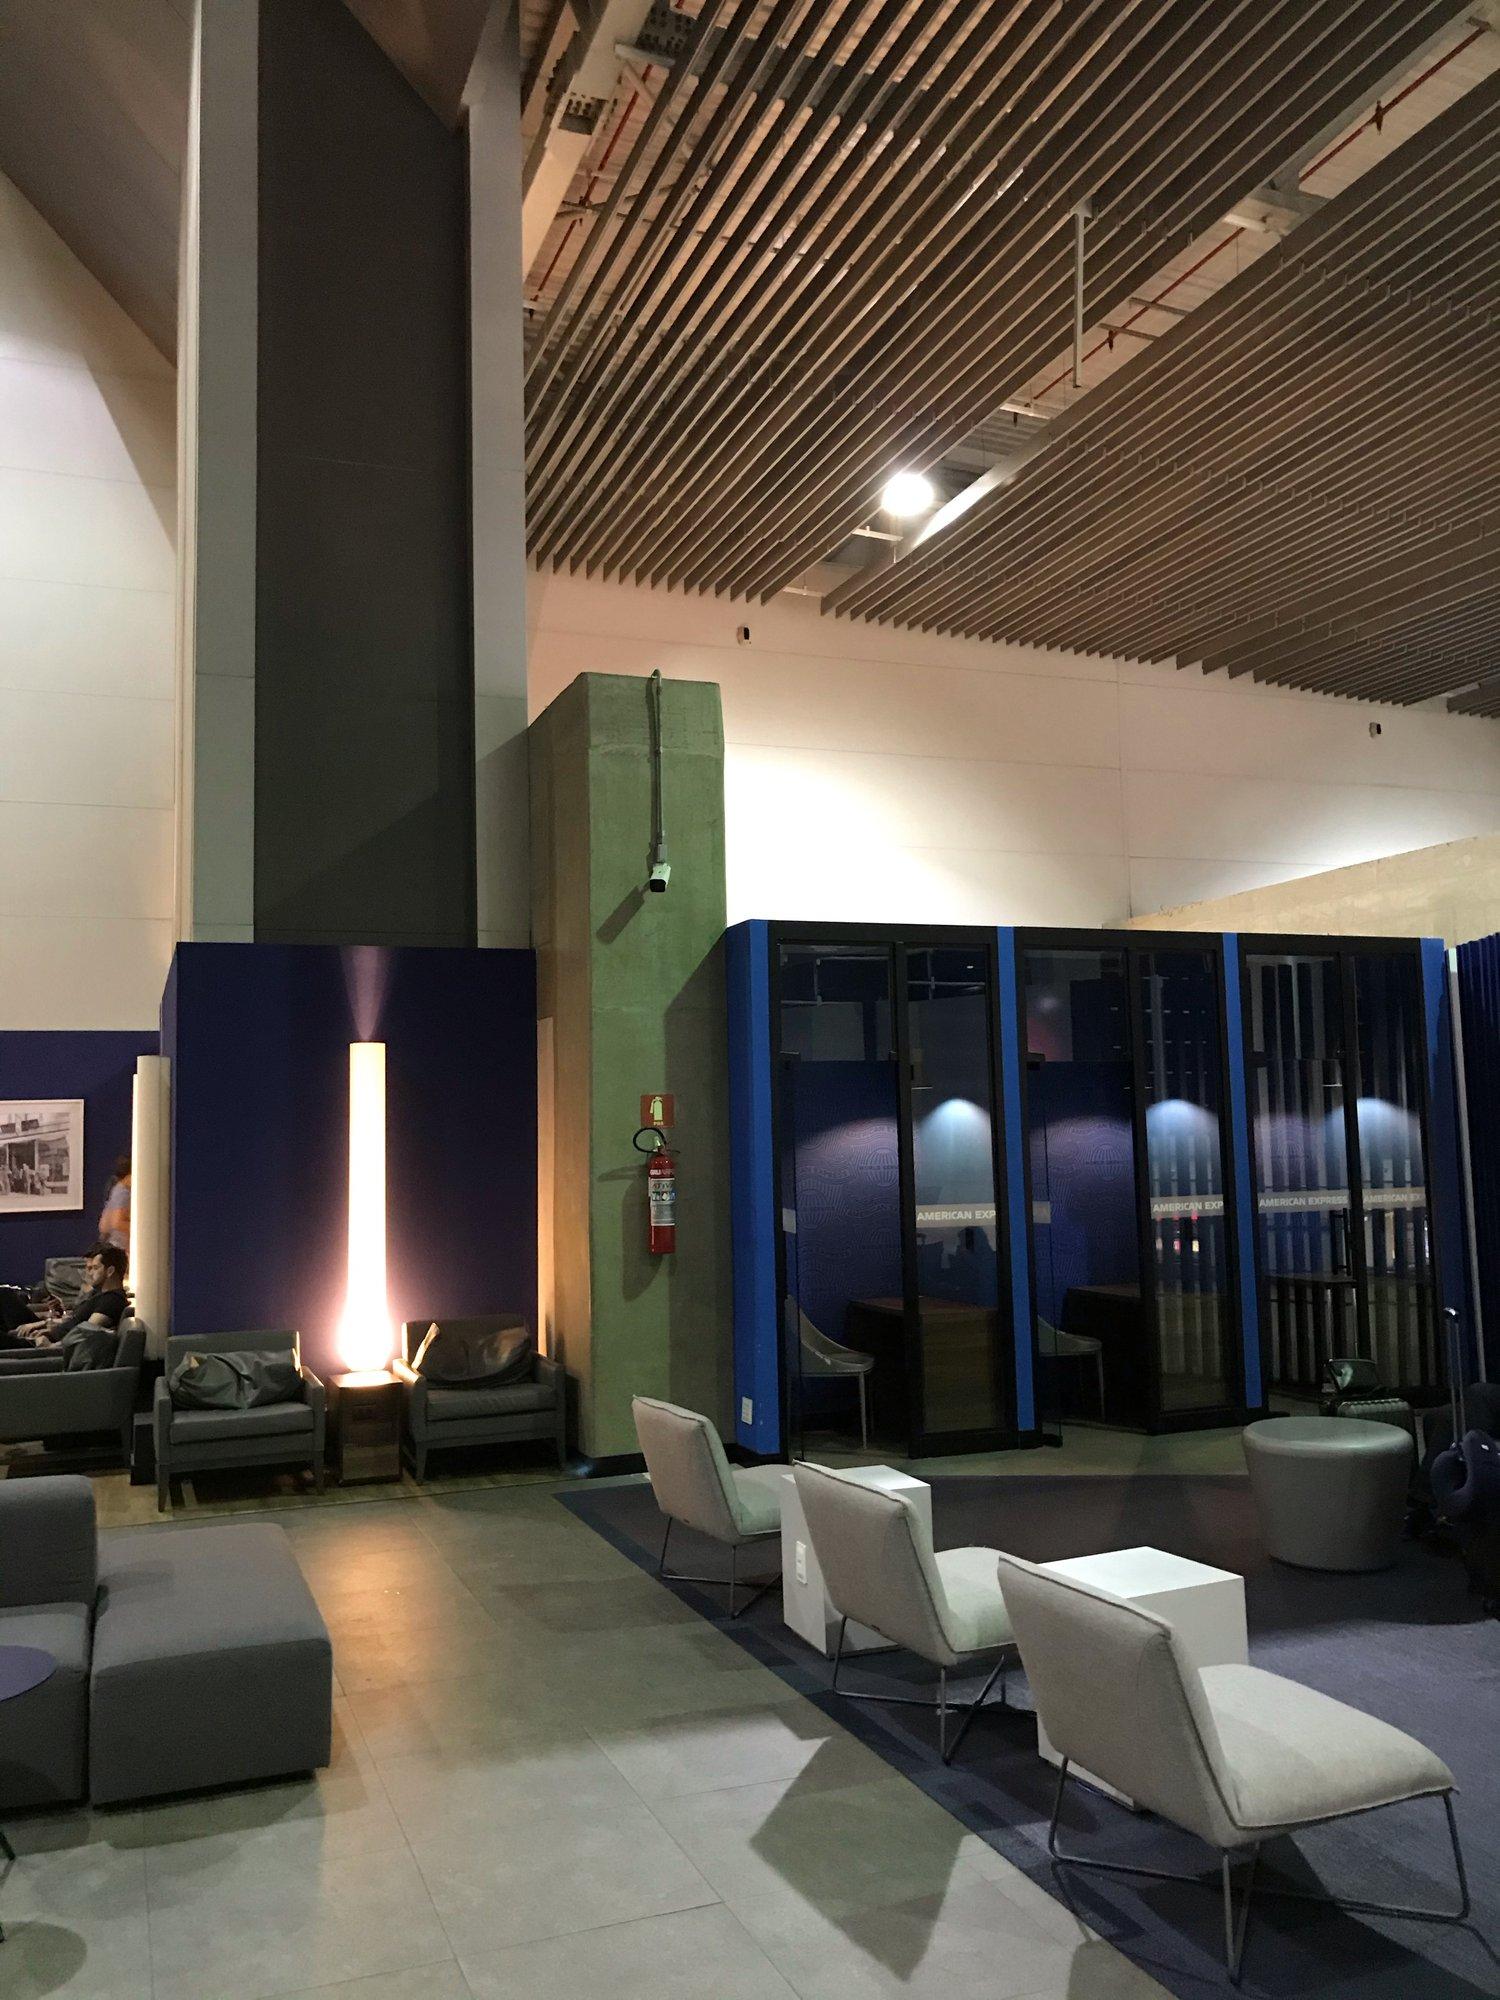 The Centurion Lounge image 3 of 4